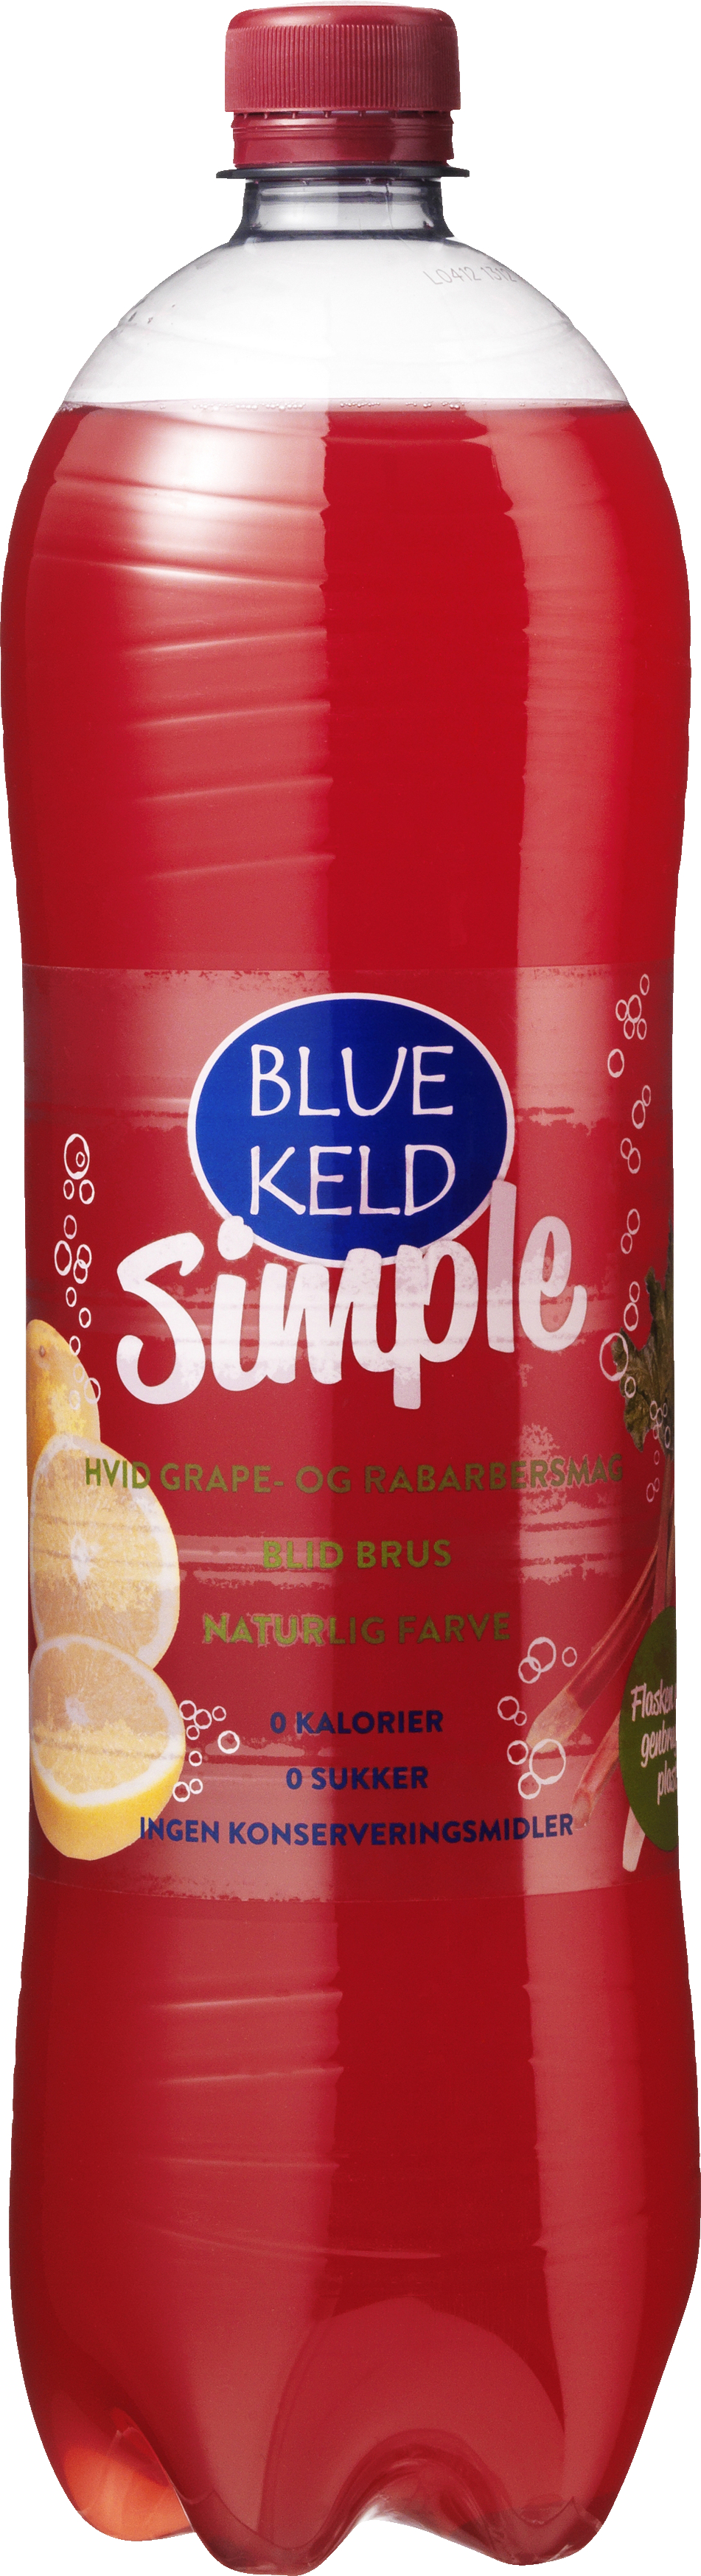 diktator stum Fearless Blue Keld Simple Hvid Grape/Rabarber 1,5 L. - SODAVAND, SAFT & VAND - VIN  MED MERE .DK